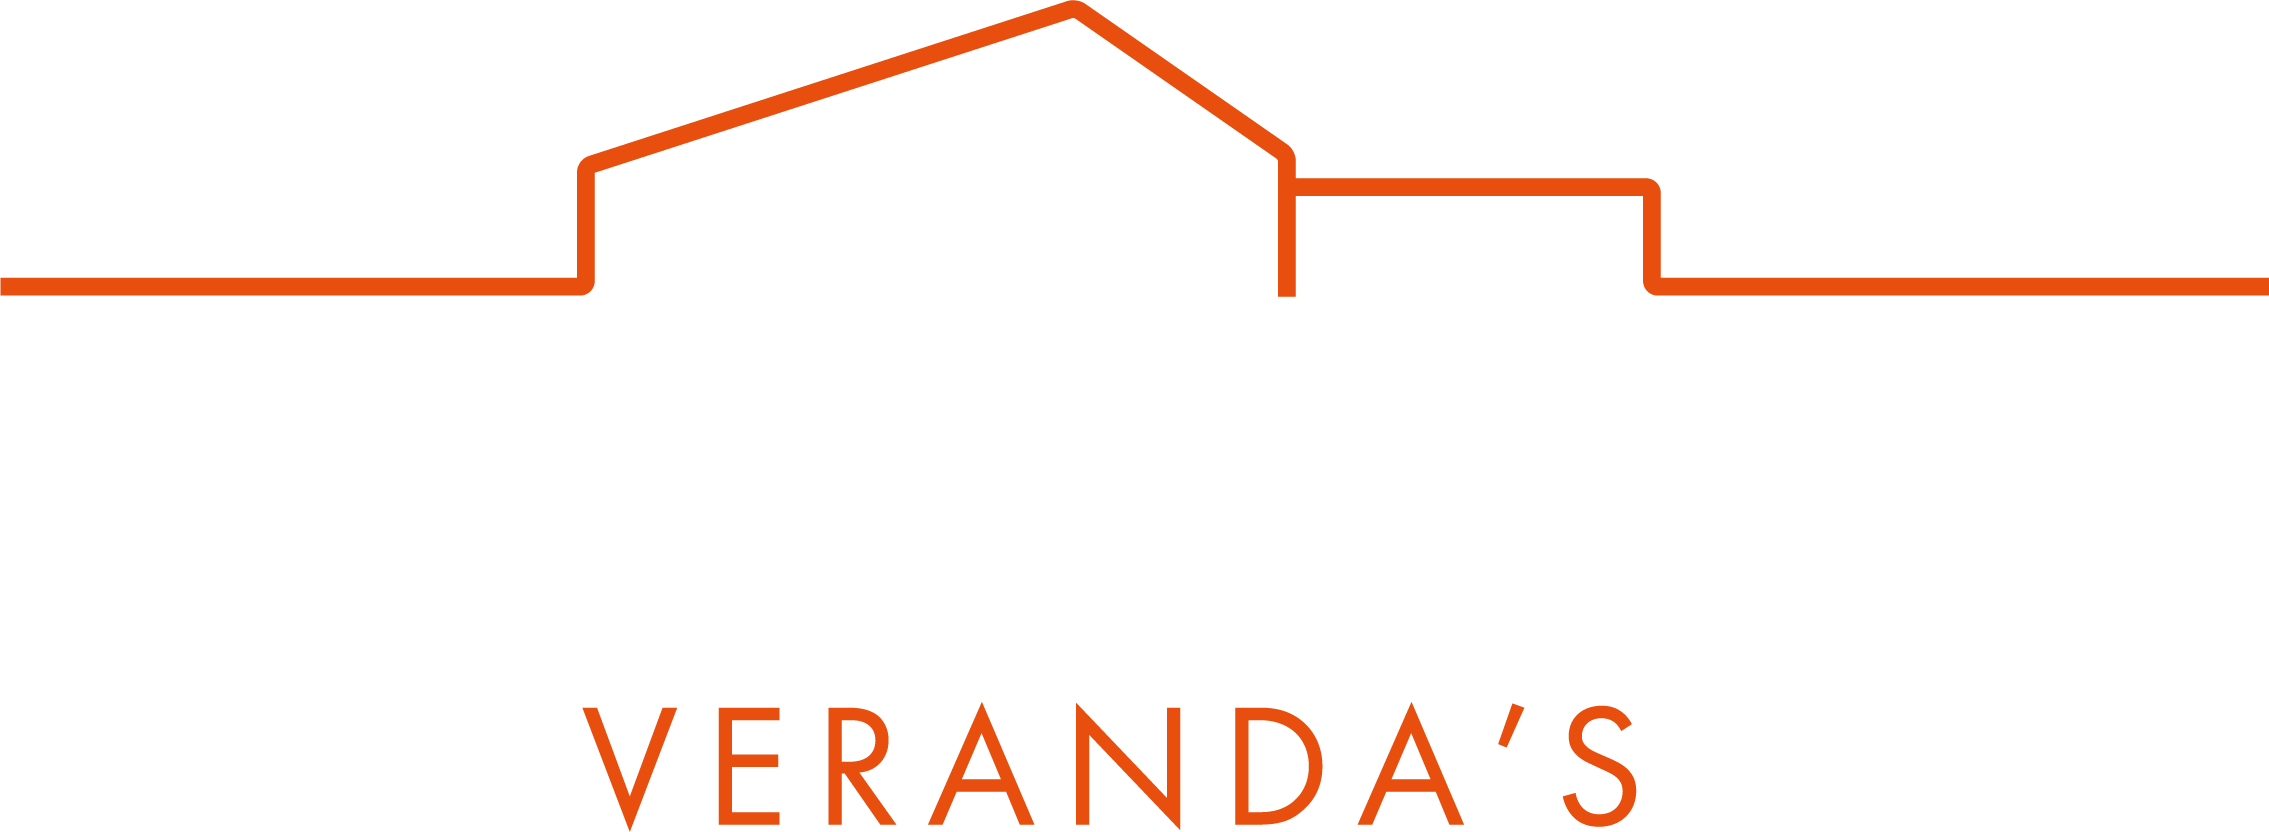 Veranda's